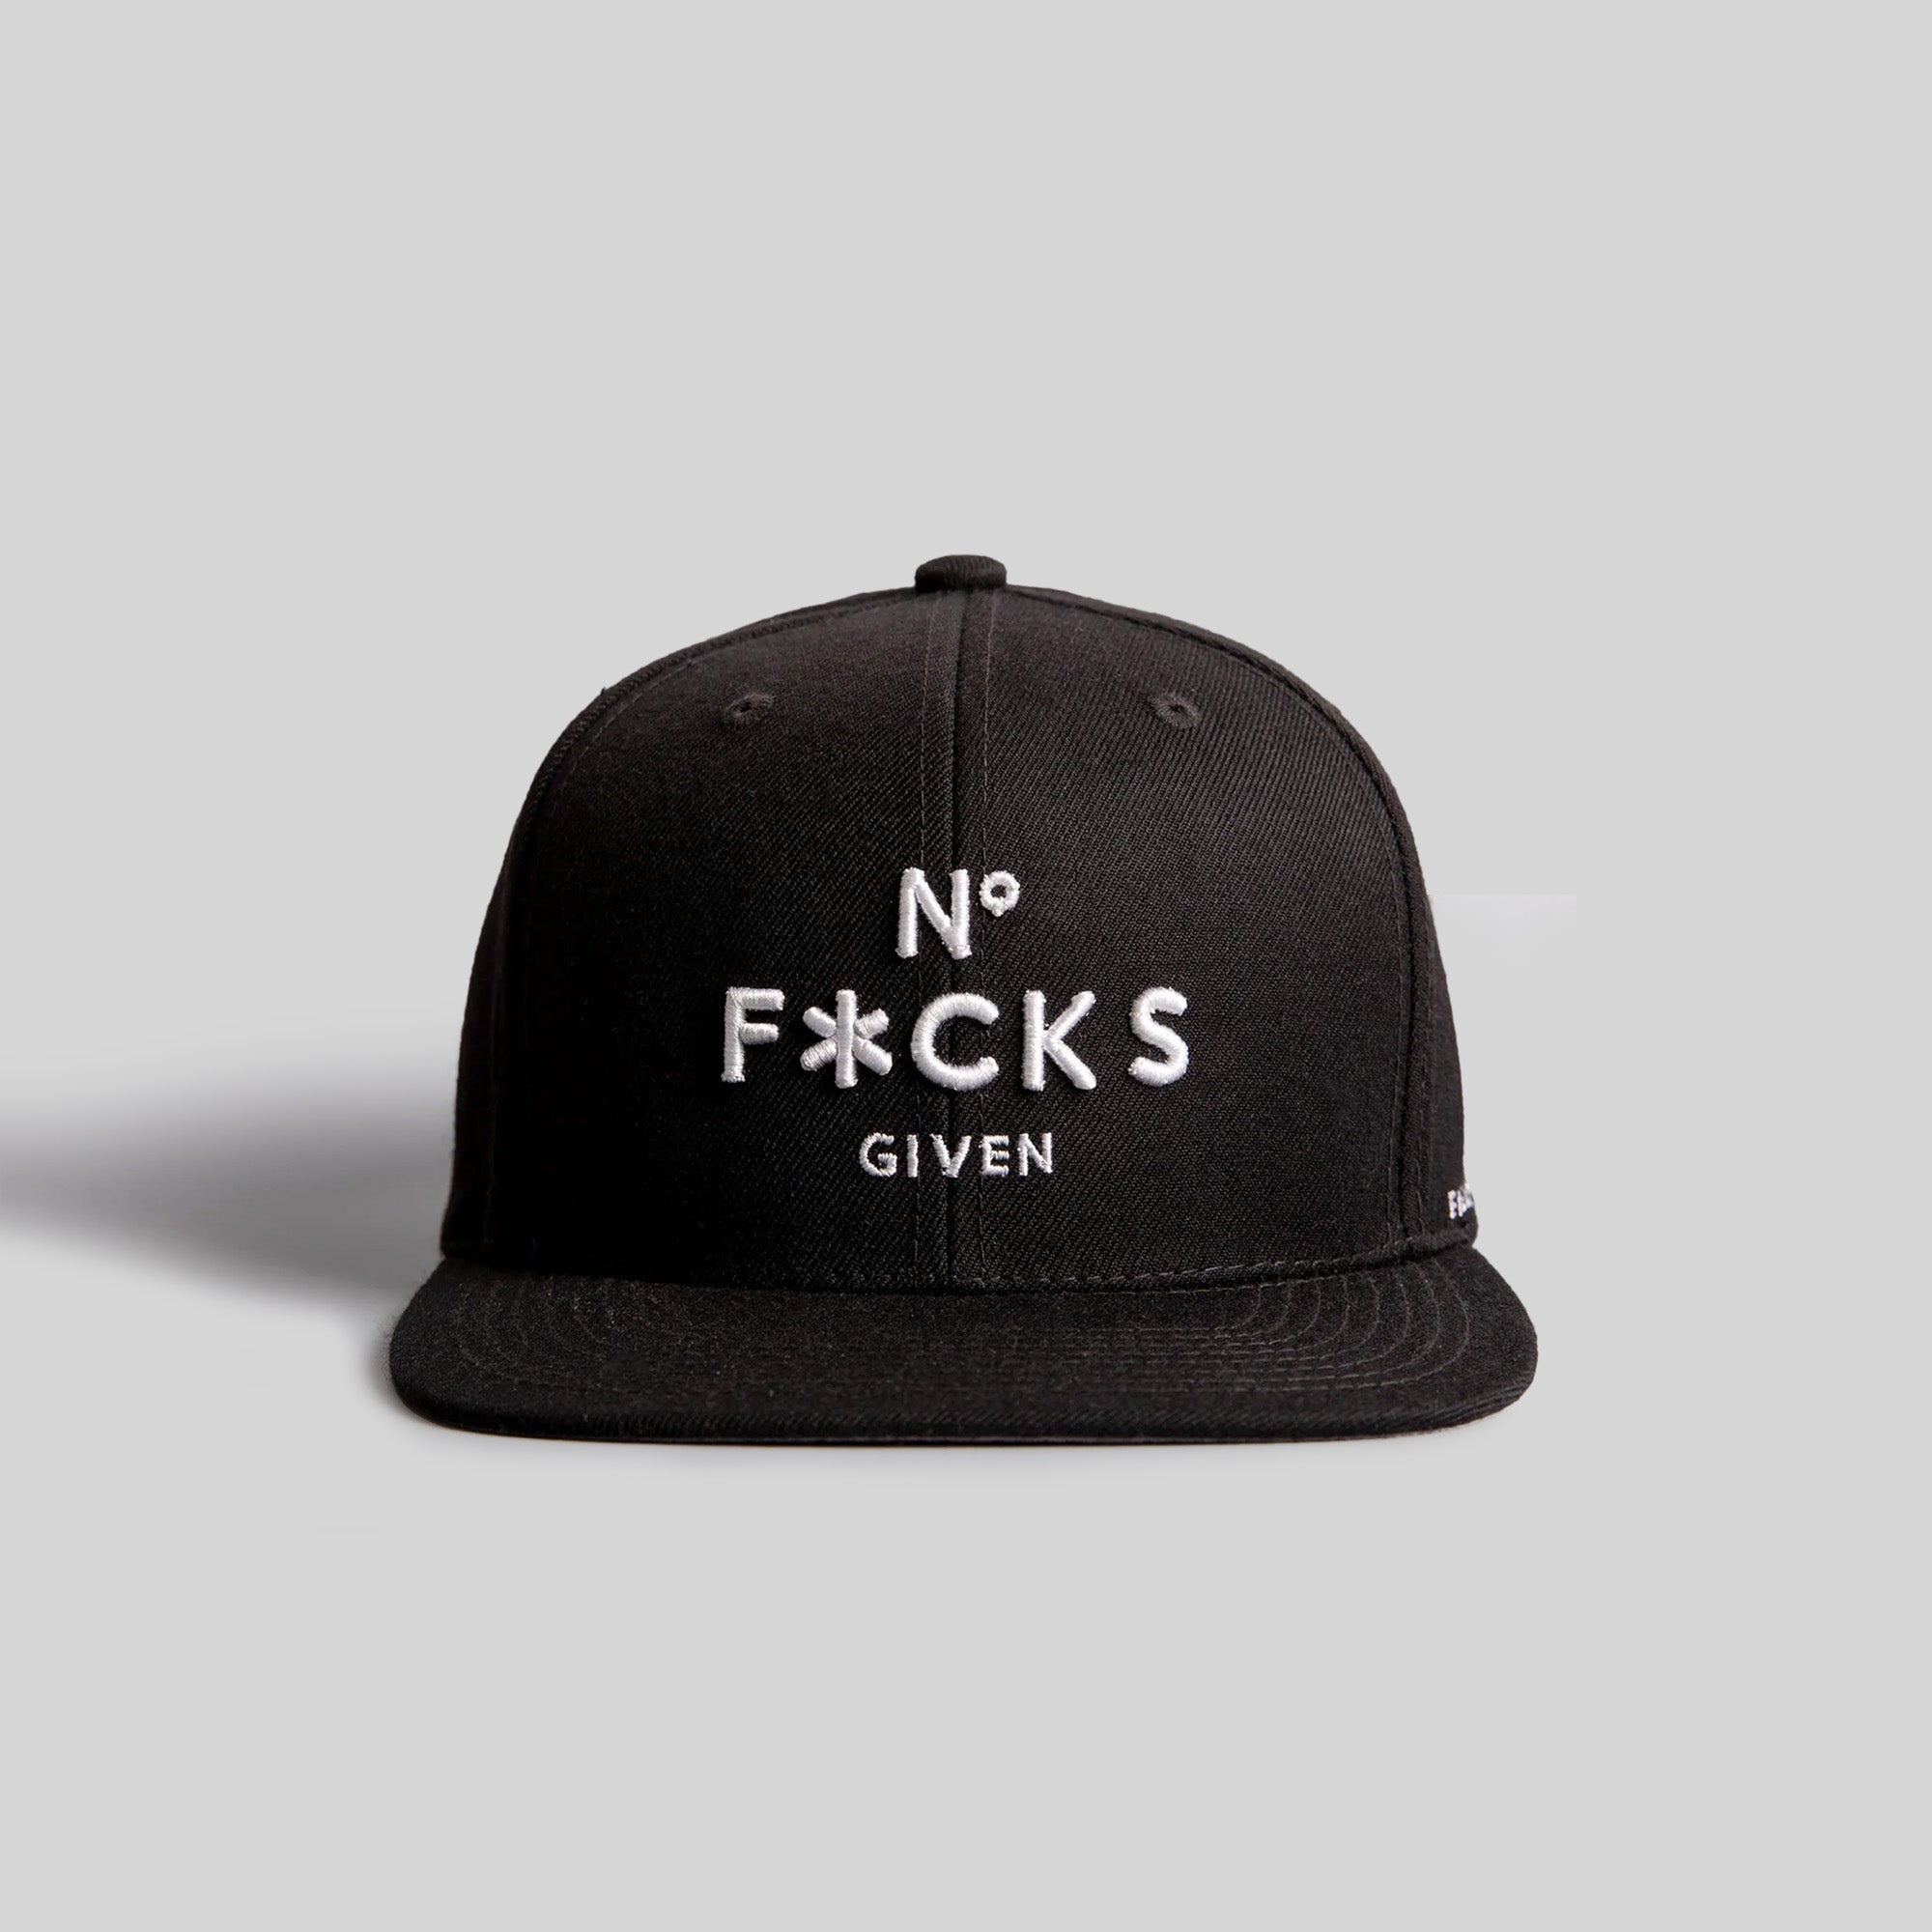 NO F*CKS GIVEN BLACK SNAPBACK HAT